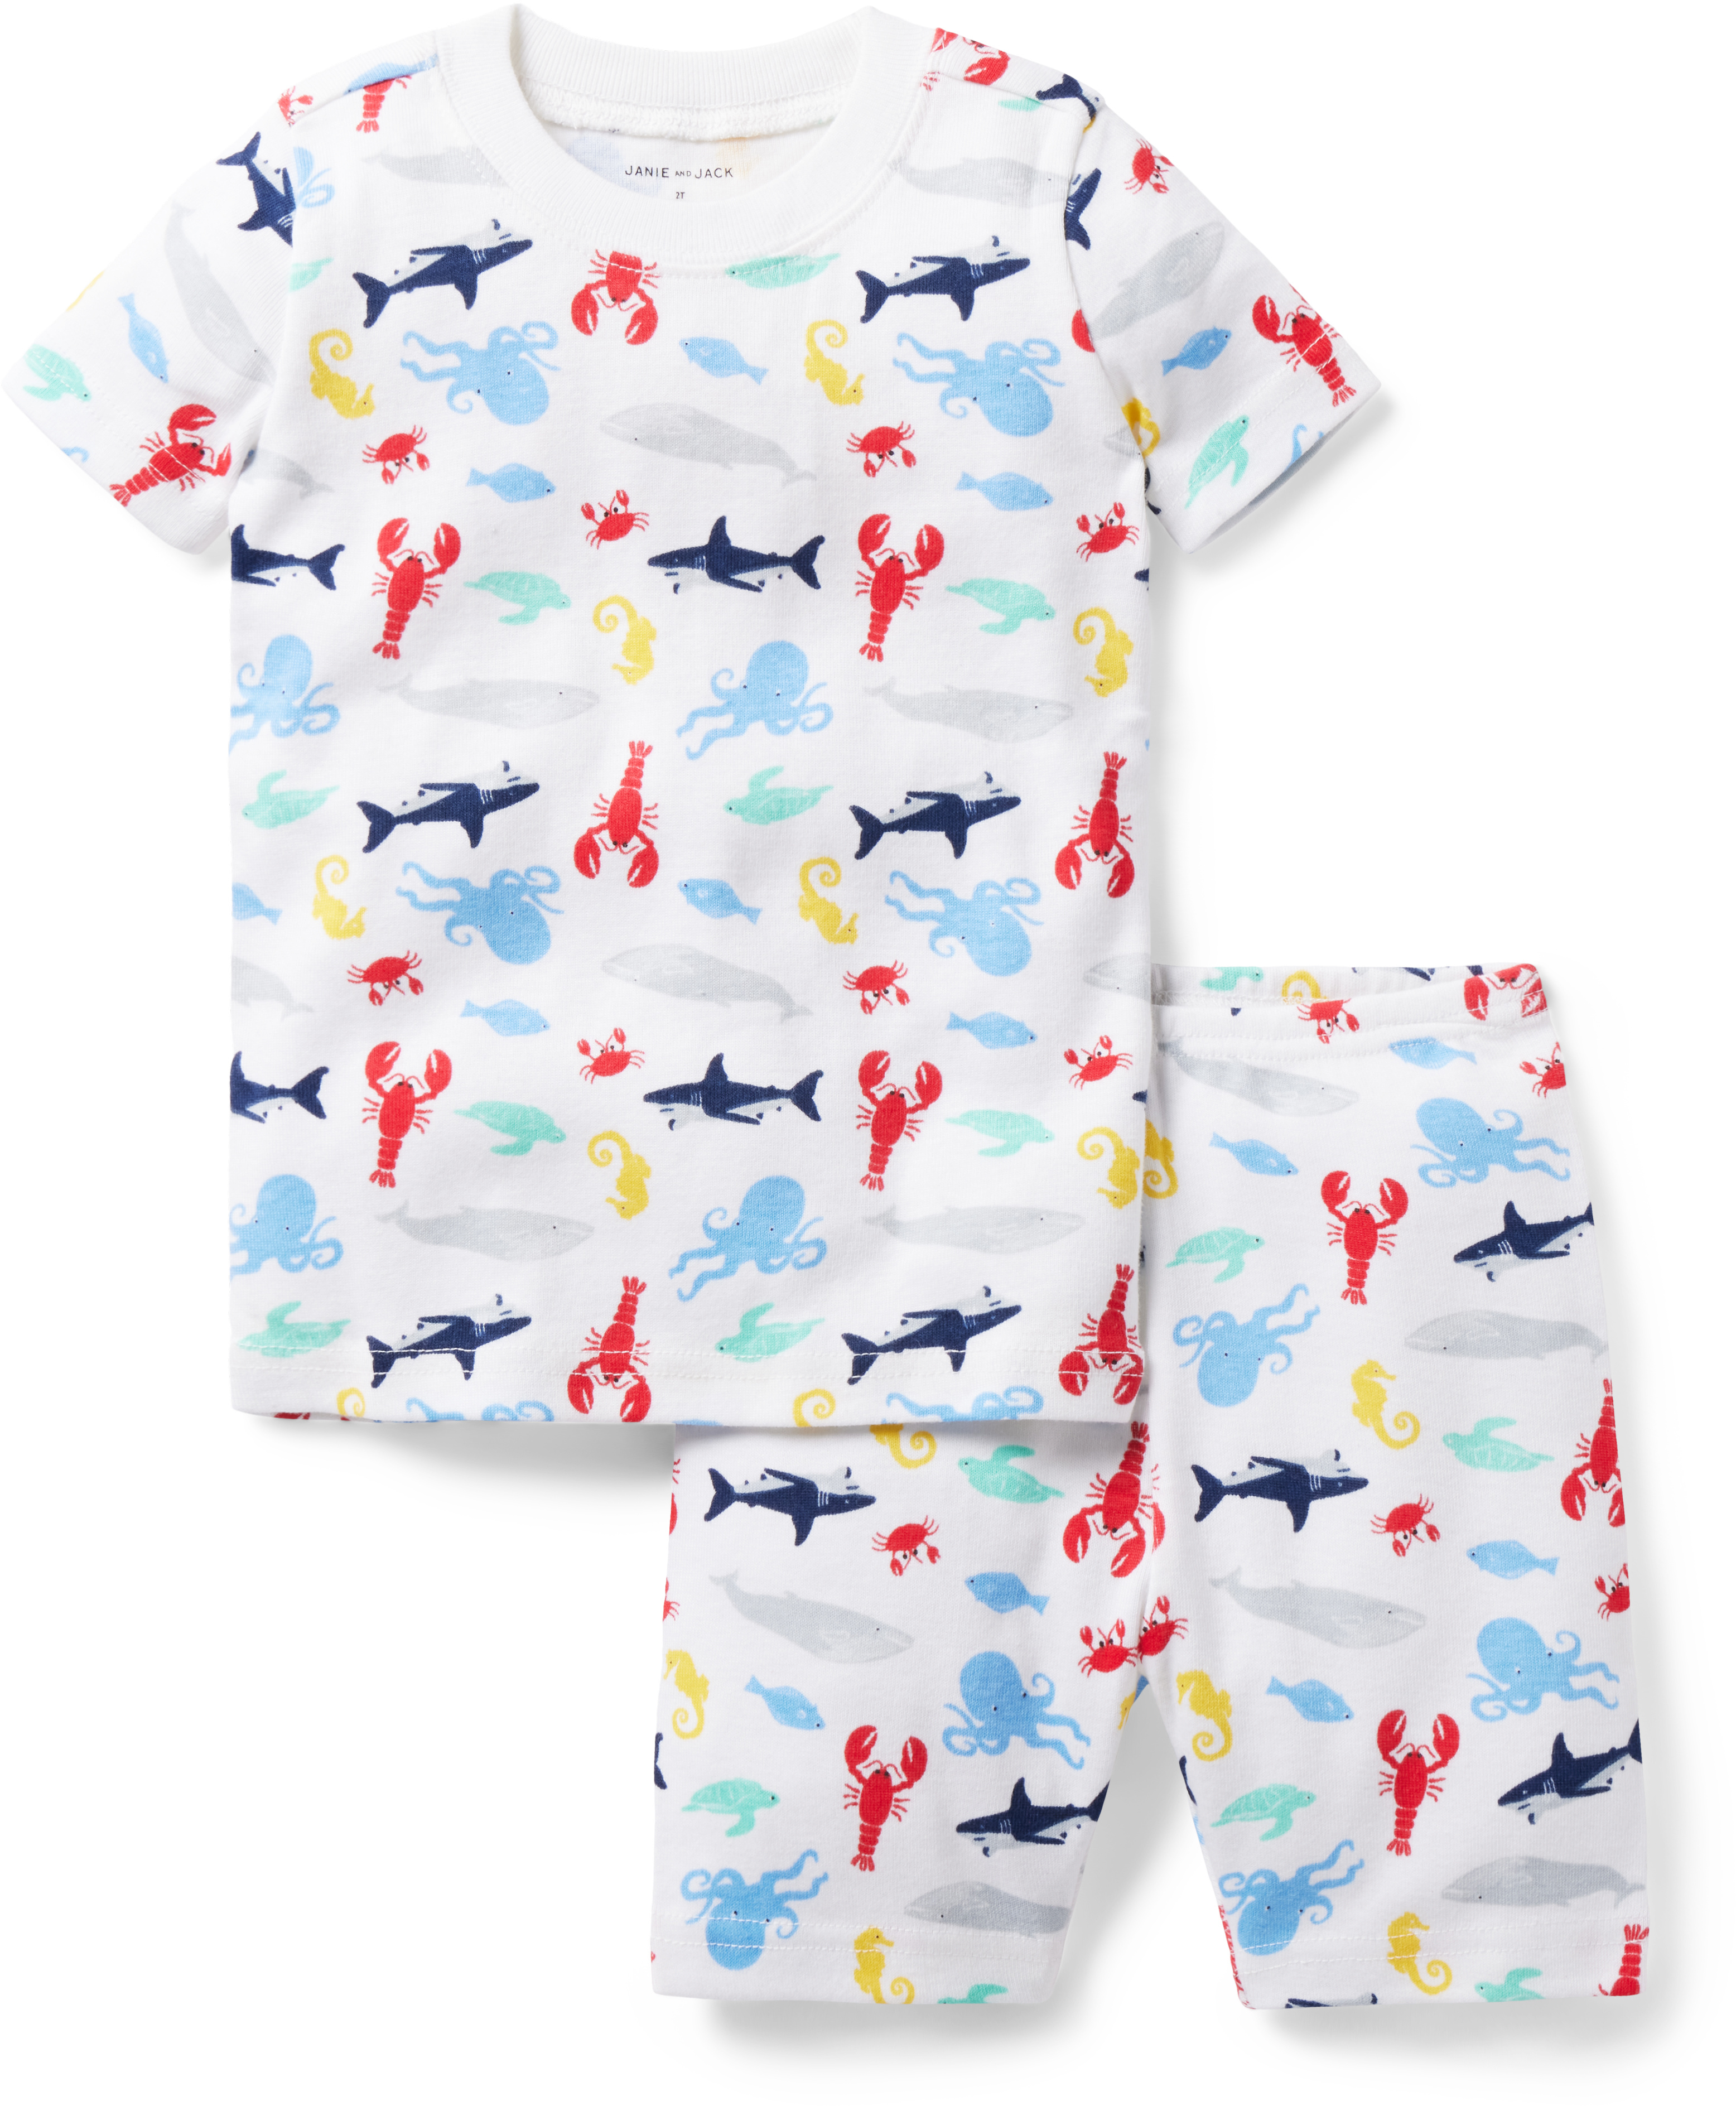 Ocean Friends Short Tight Fit Sleepwear (Toddler/Little Kids/Big Kids) Janie and Jack